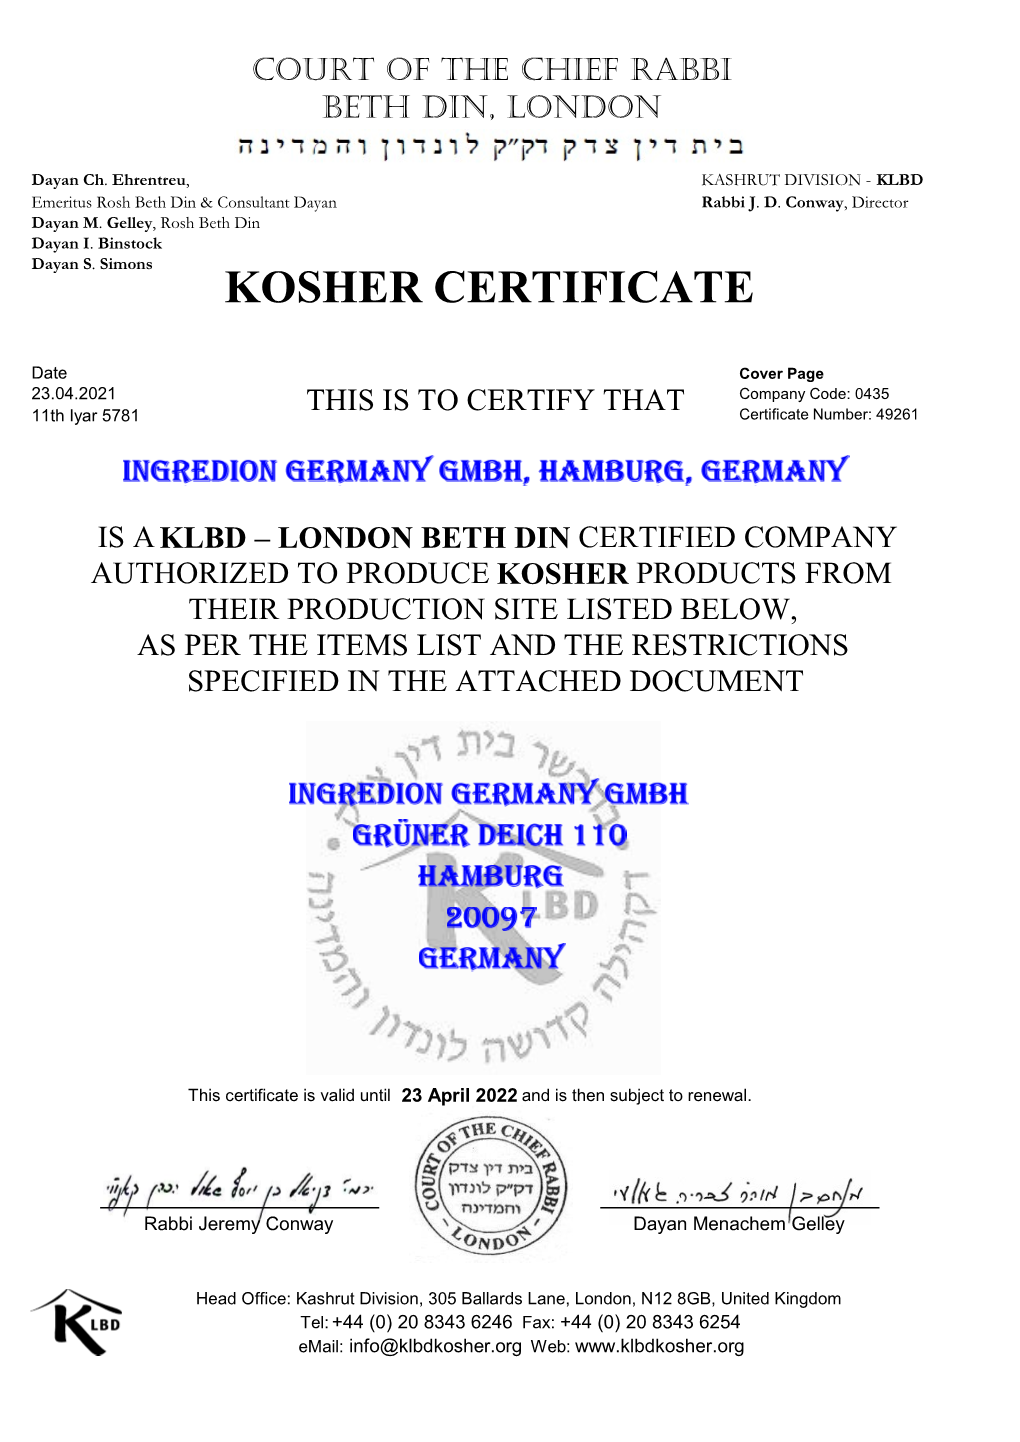 Kosher Certificate